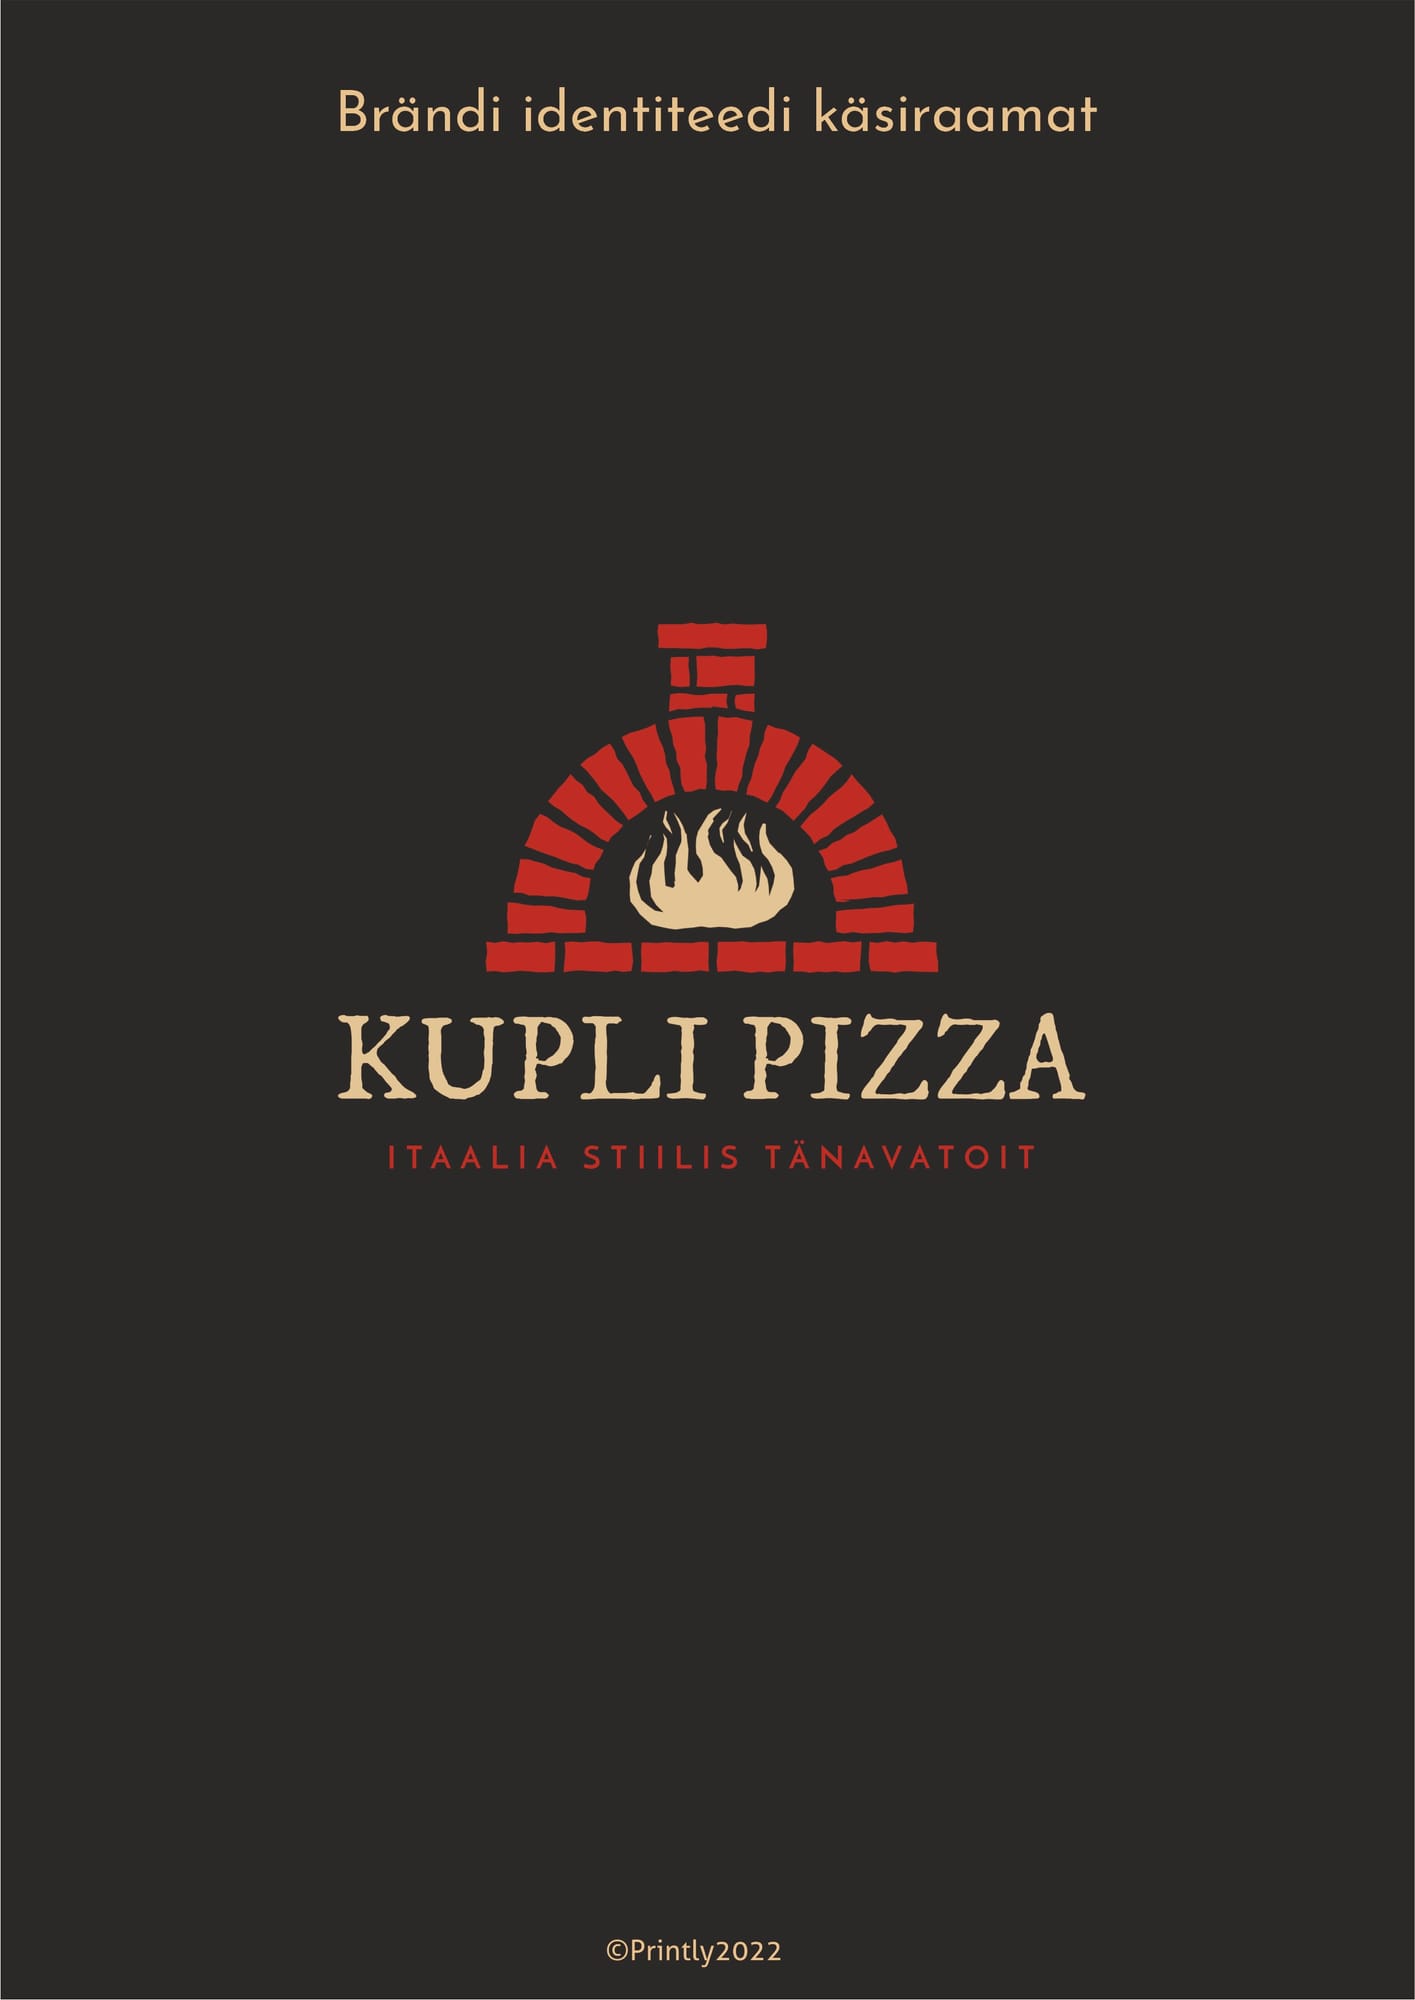 KupliPizza_logoSertifikaat_lk1.jpg